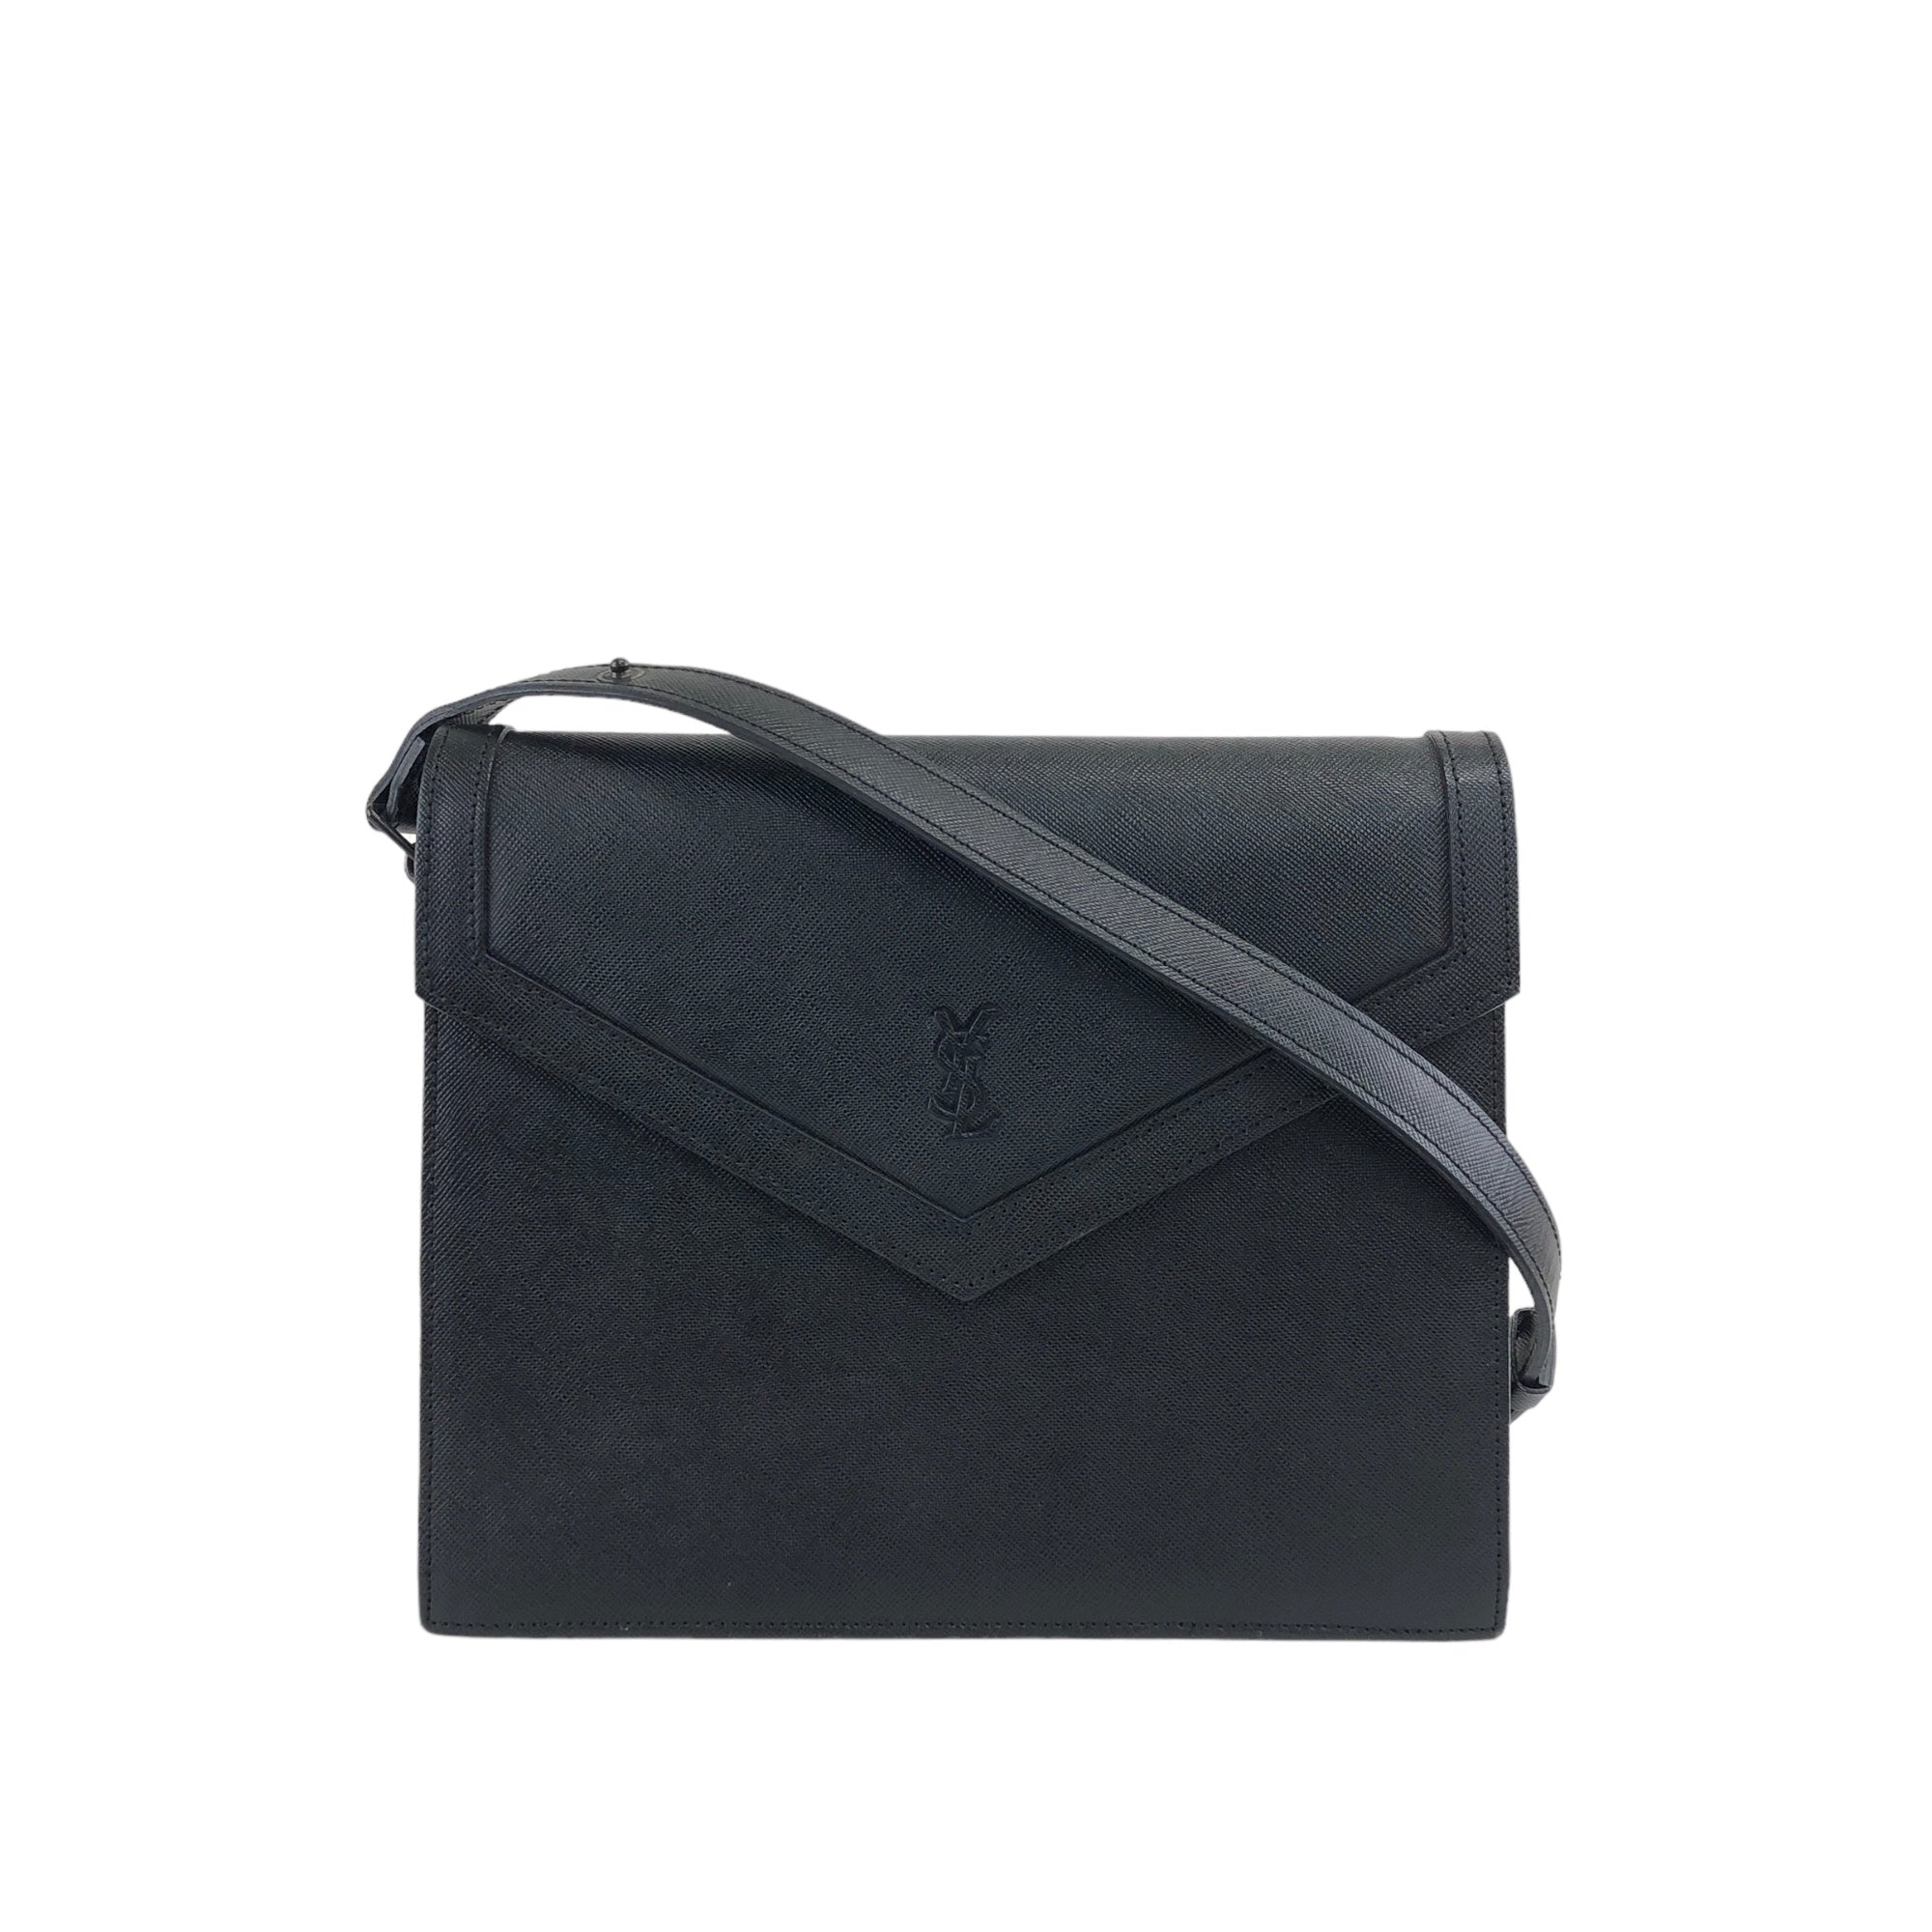 Leather handbag Saint Laurent Black in Leather - 36468317